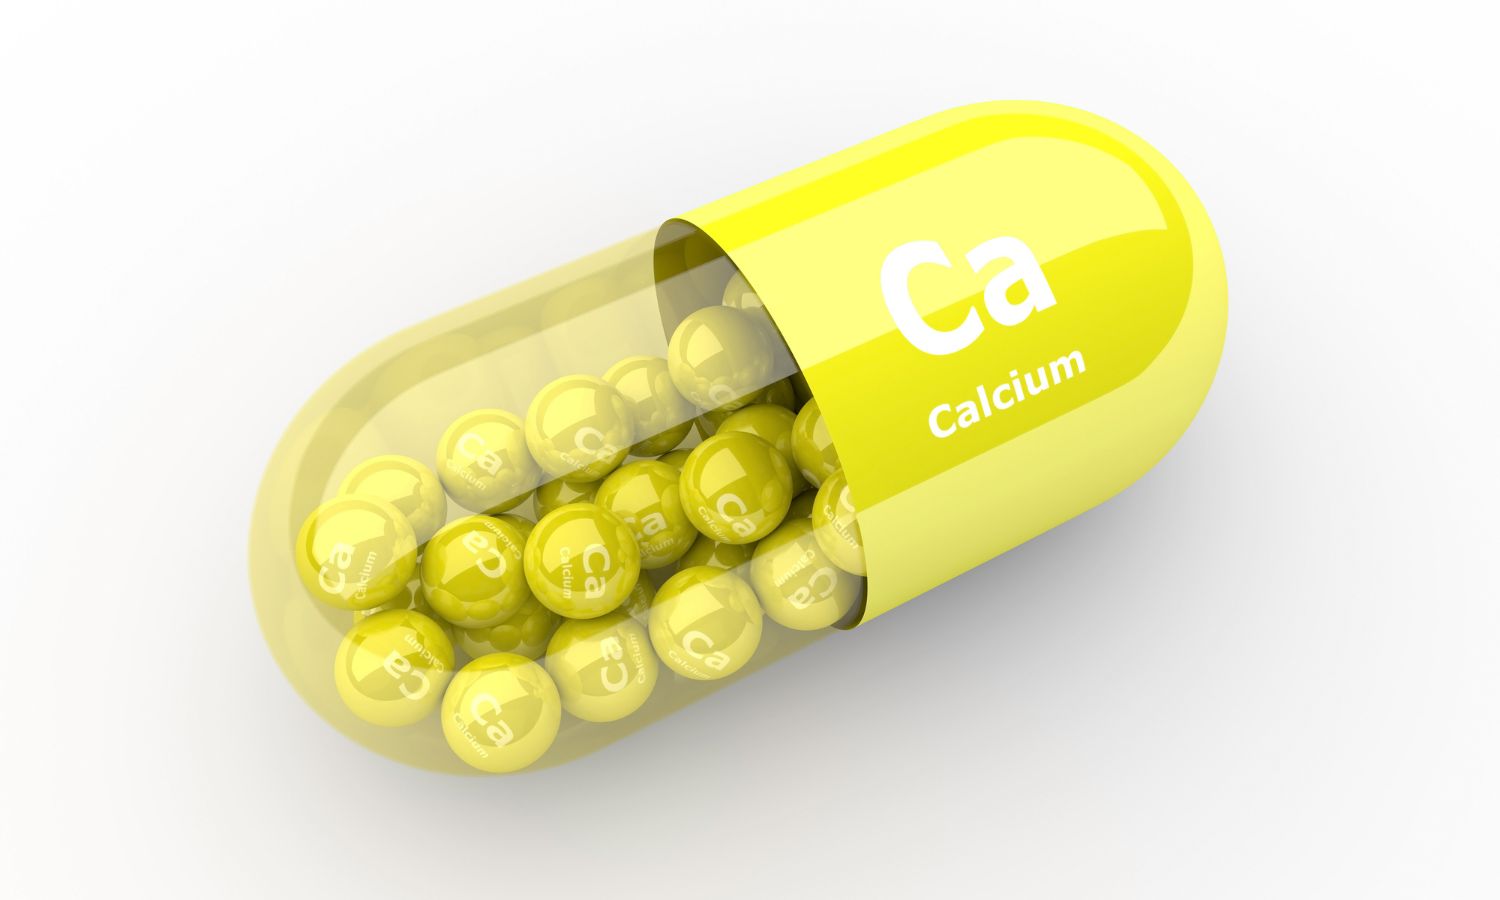 Crushing Calcium Tablets